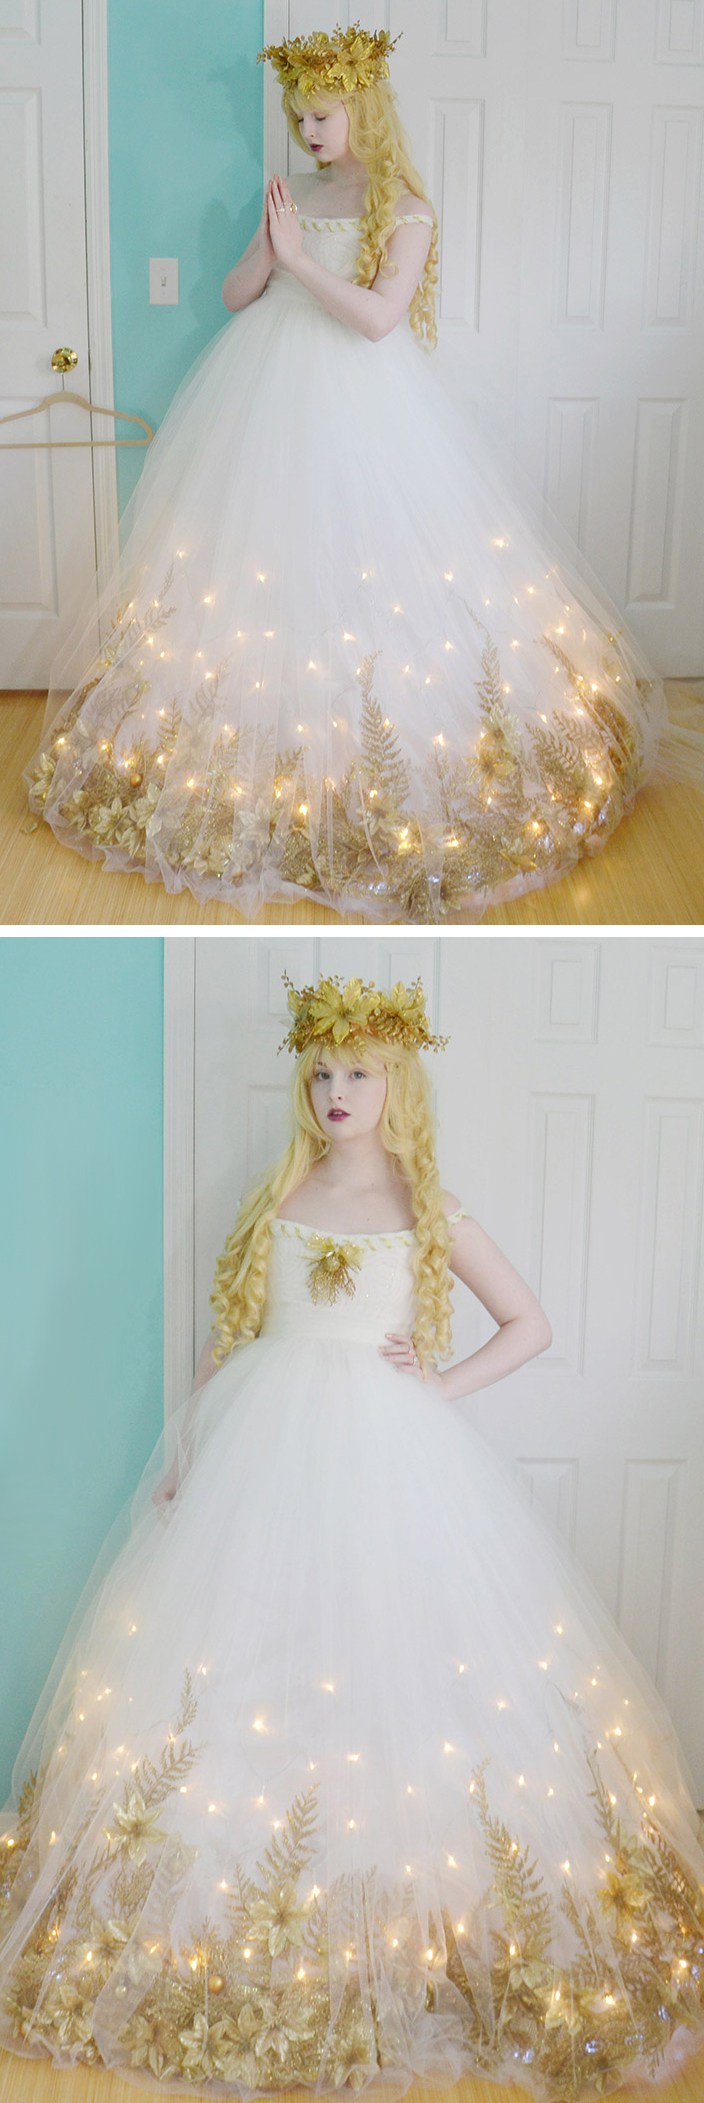 Light up fairy princess dress